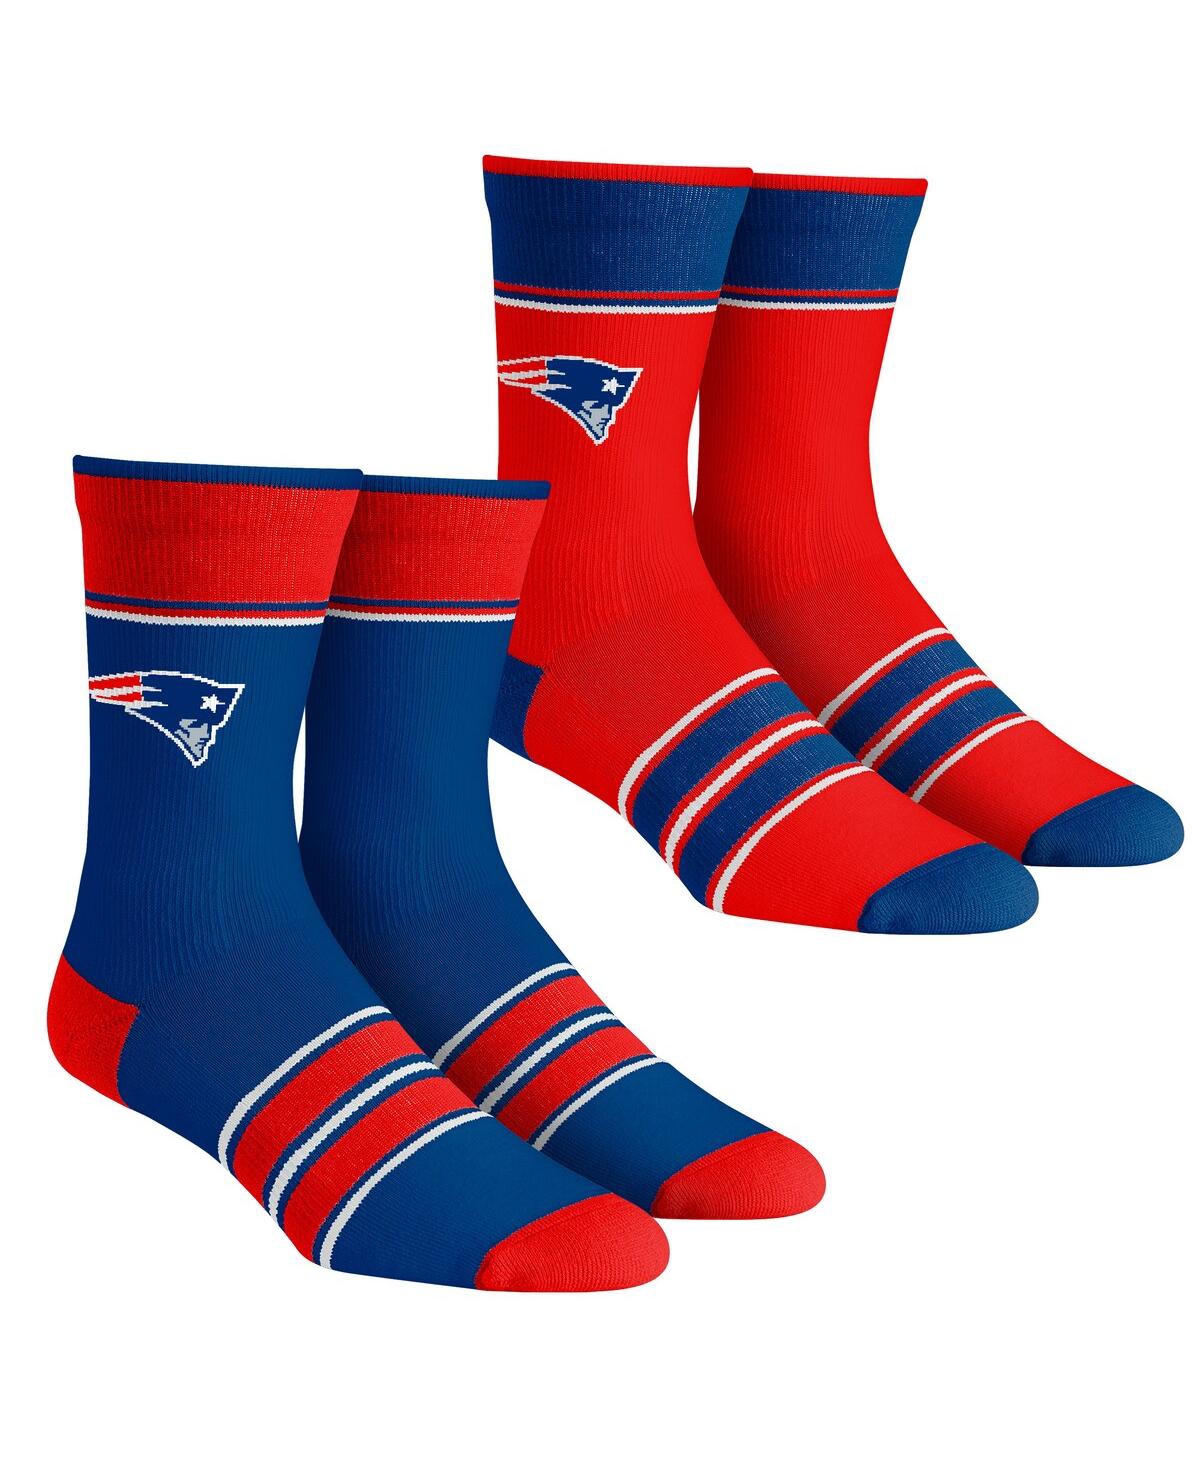 Rock 'em Men's And Women's  Socks New England Patriots Multi-stripe 2-pack Team Crew Sock Set